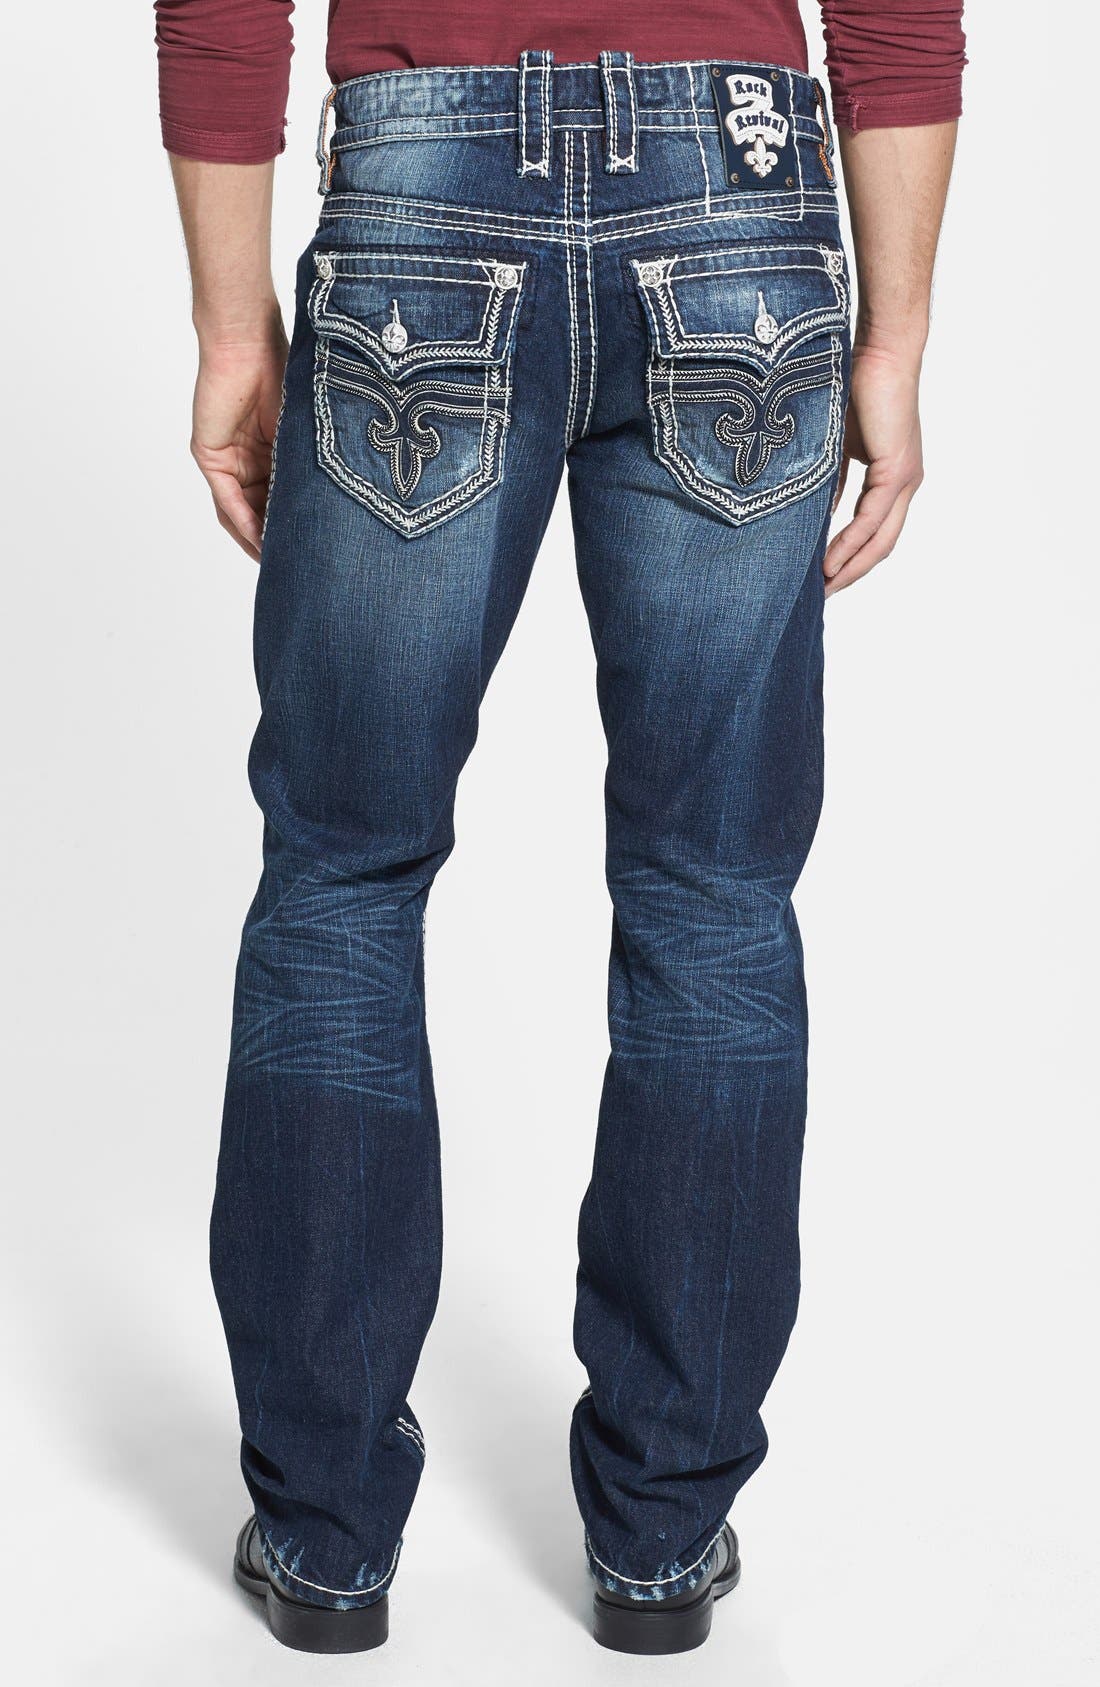 dark jean overalls